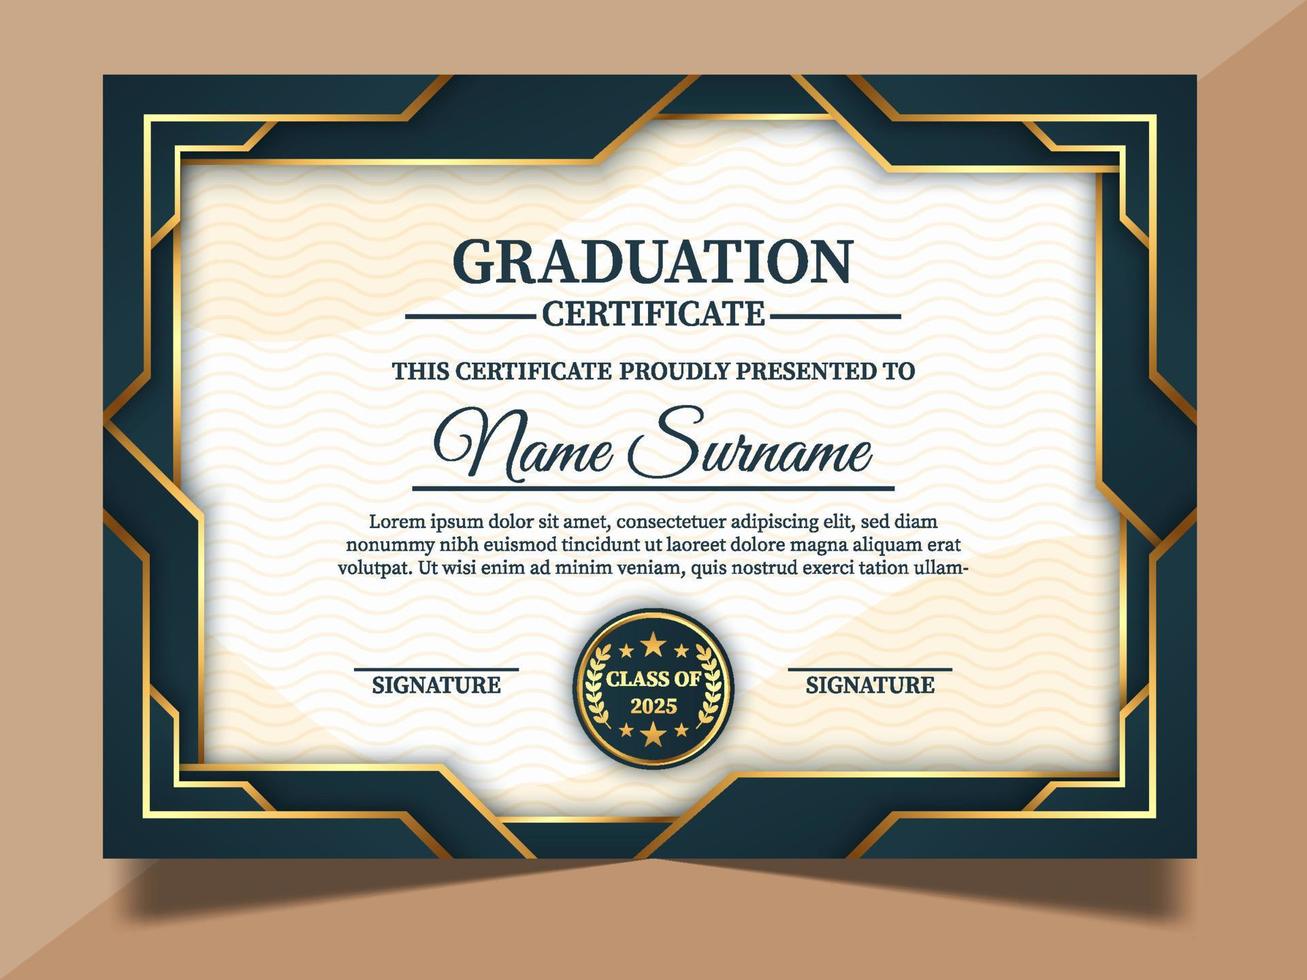 Graduation Certificate Background vector